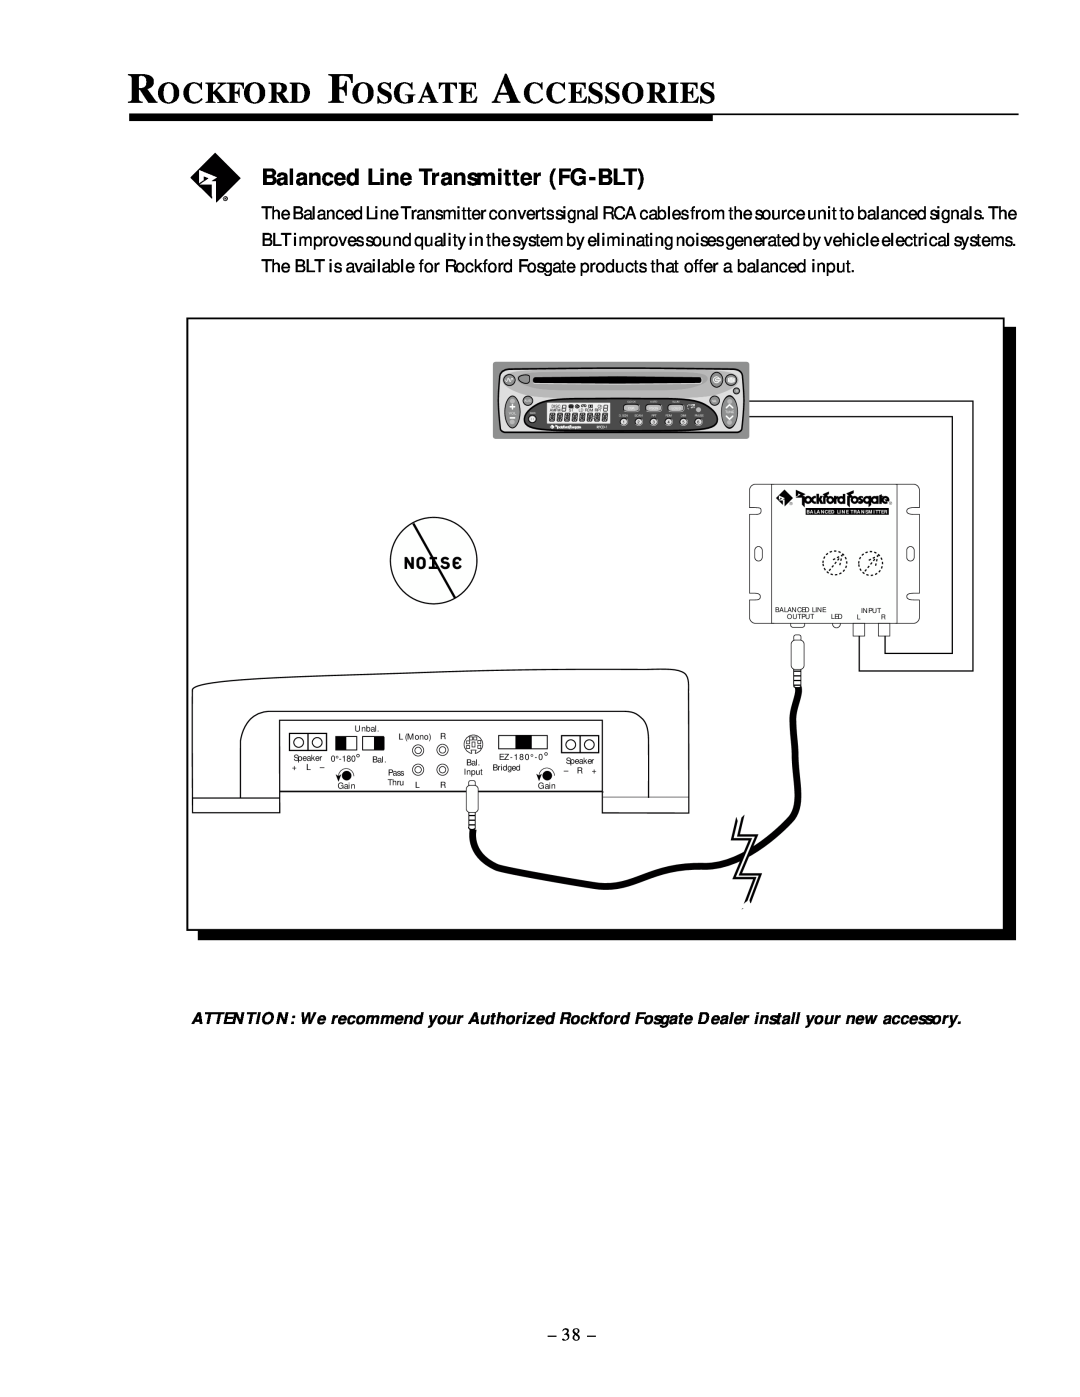 Rockford Fosgate 250.1 manual Rockford Fosgate Accessories, Noise, Balanced Line Transmitter FG-BLT 